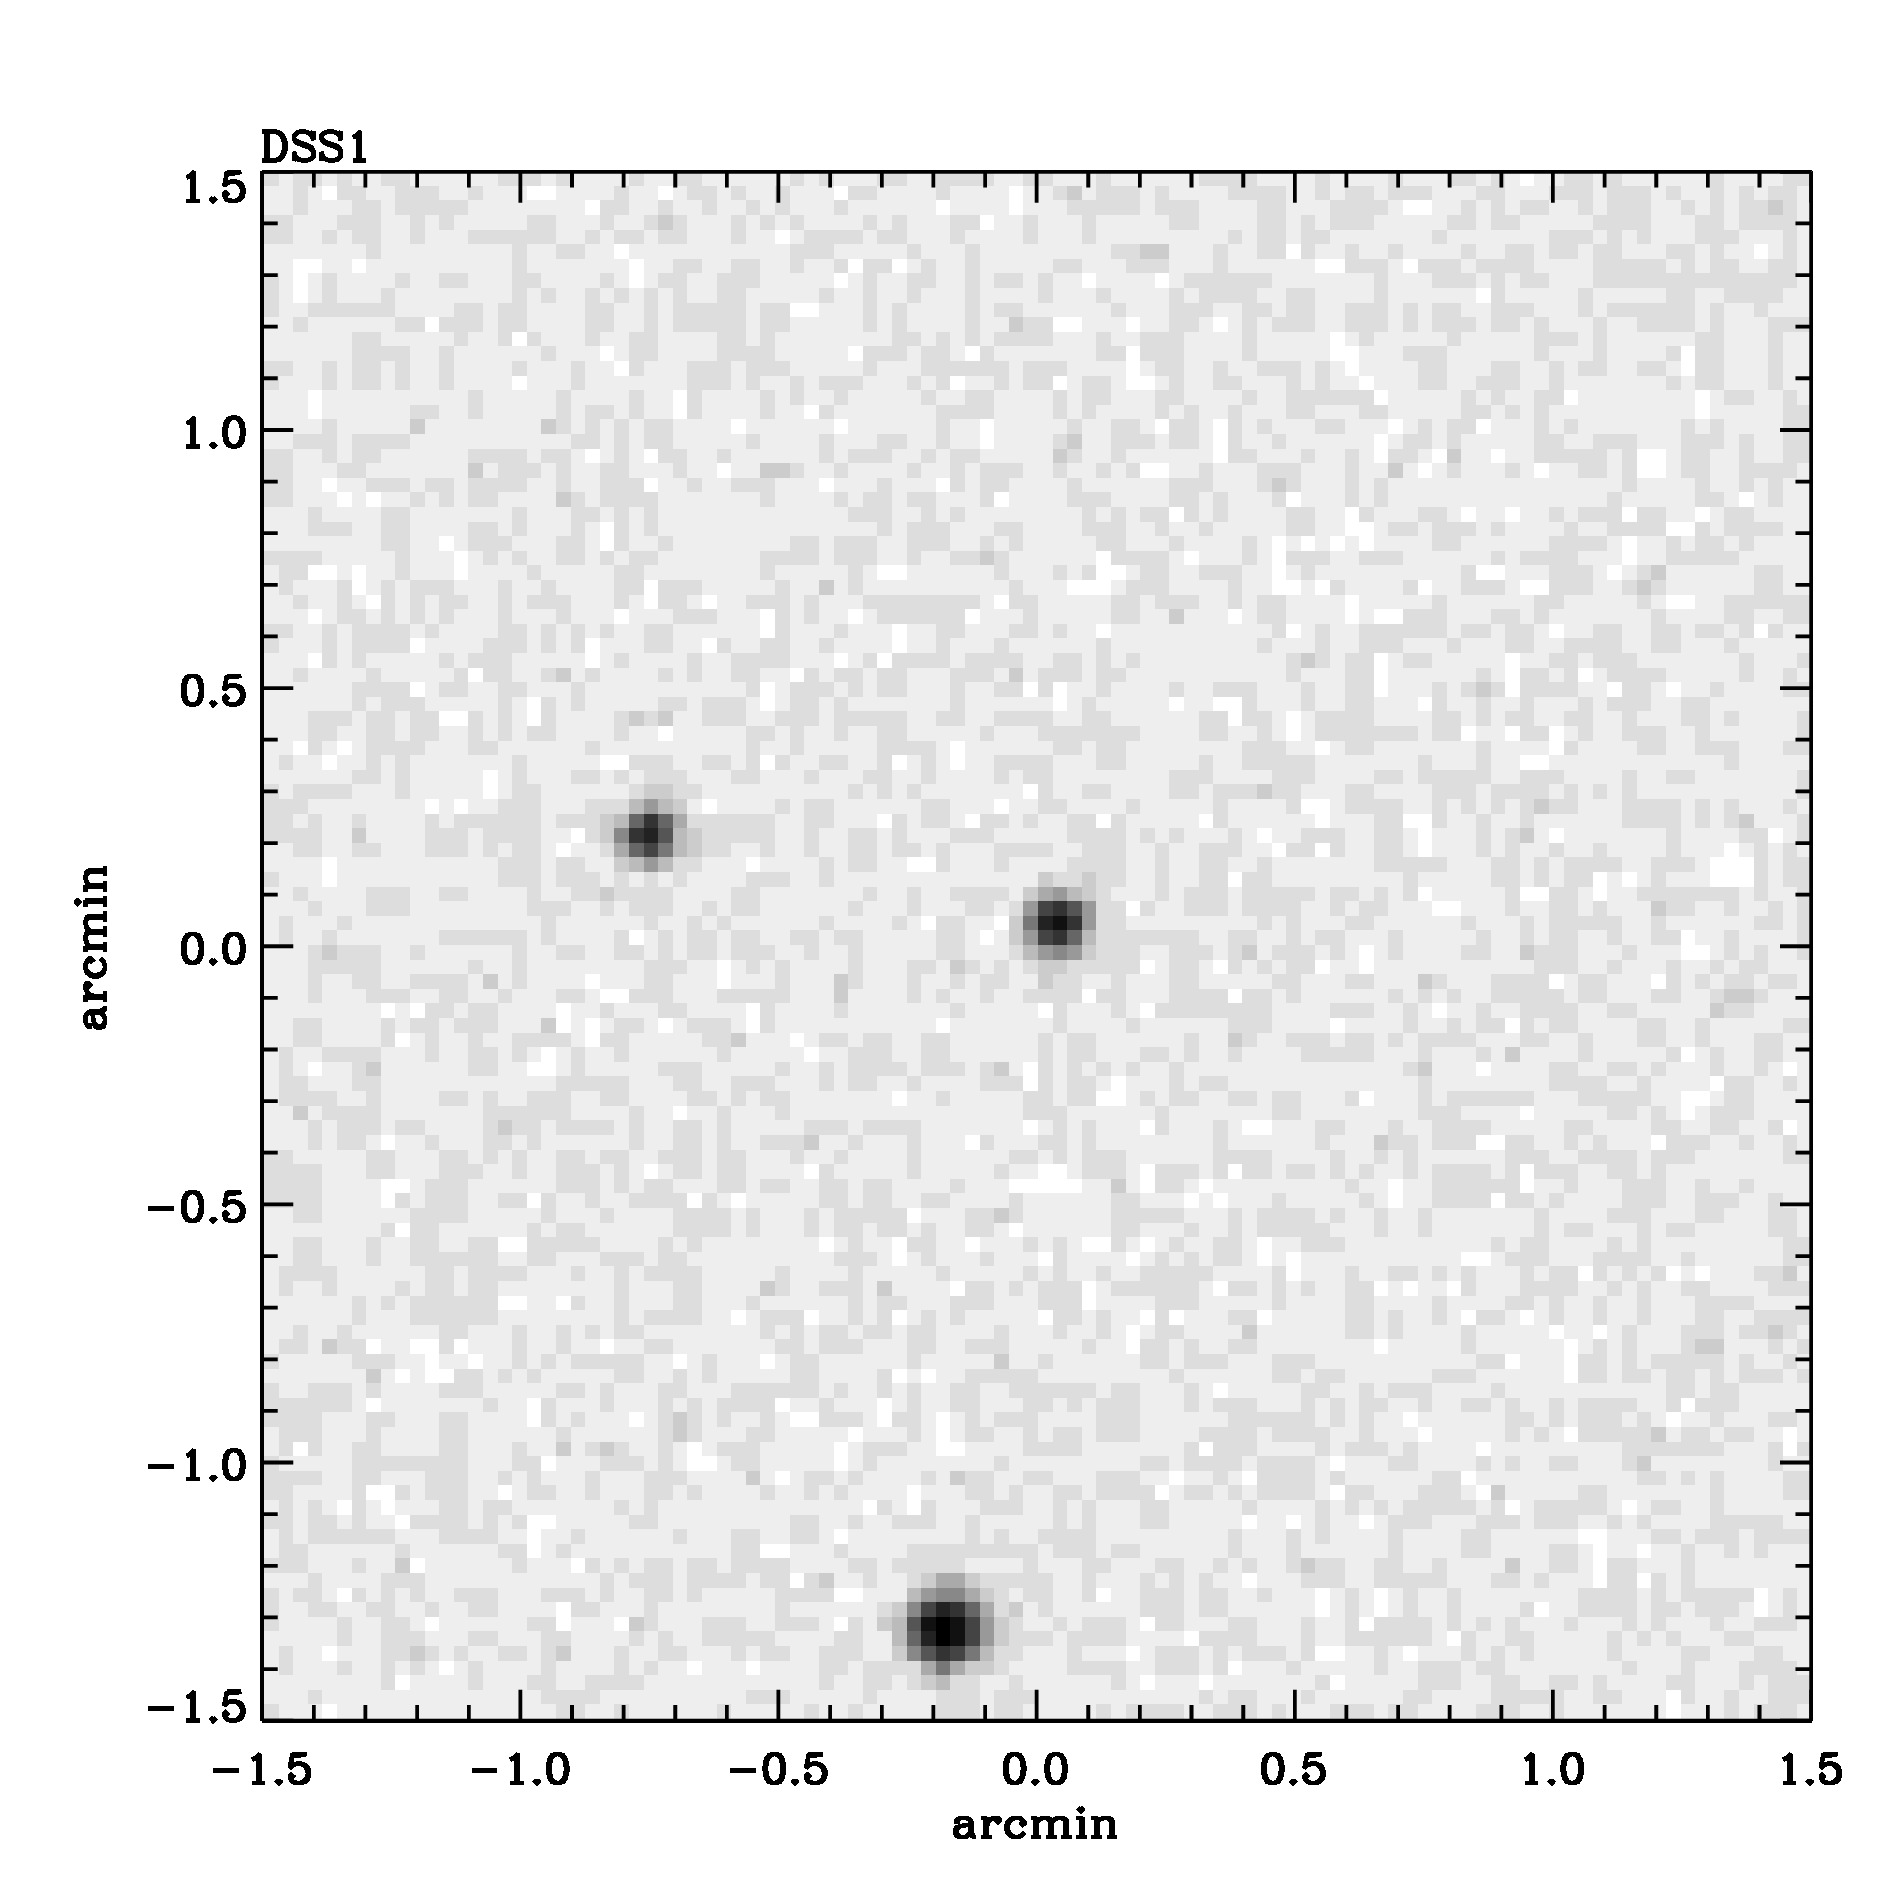 Optical image for SWIFT J1301.2-6139